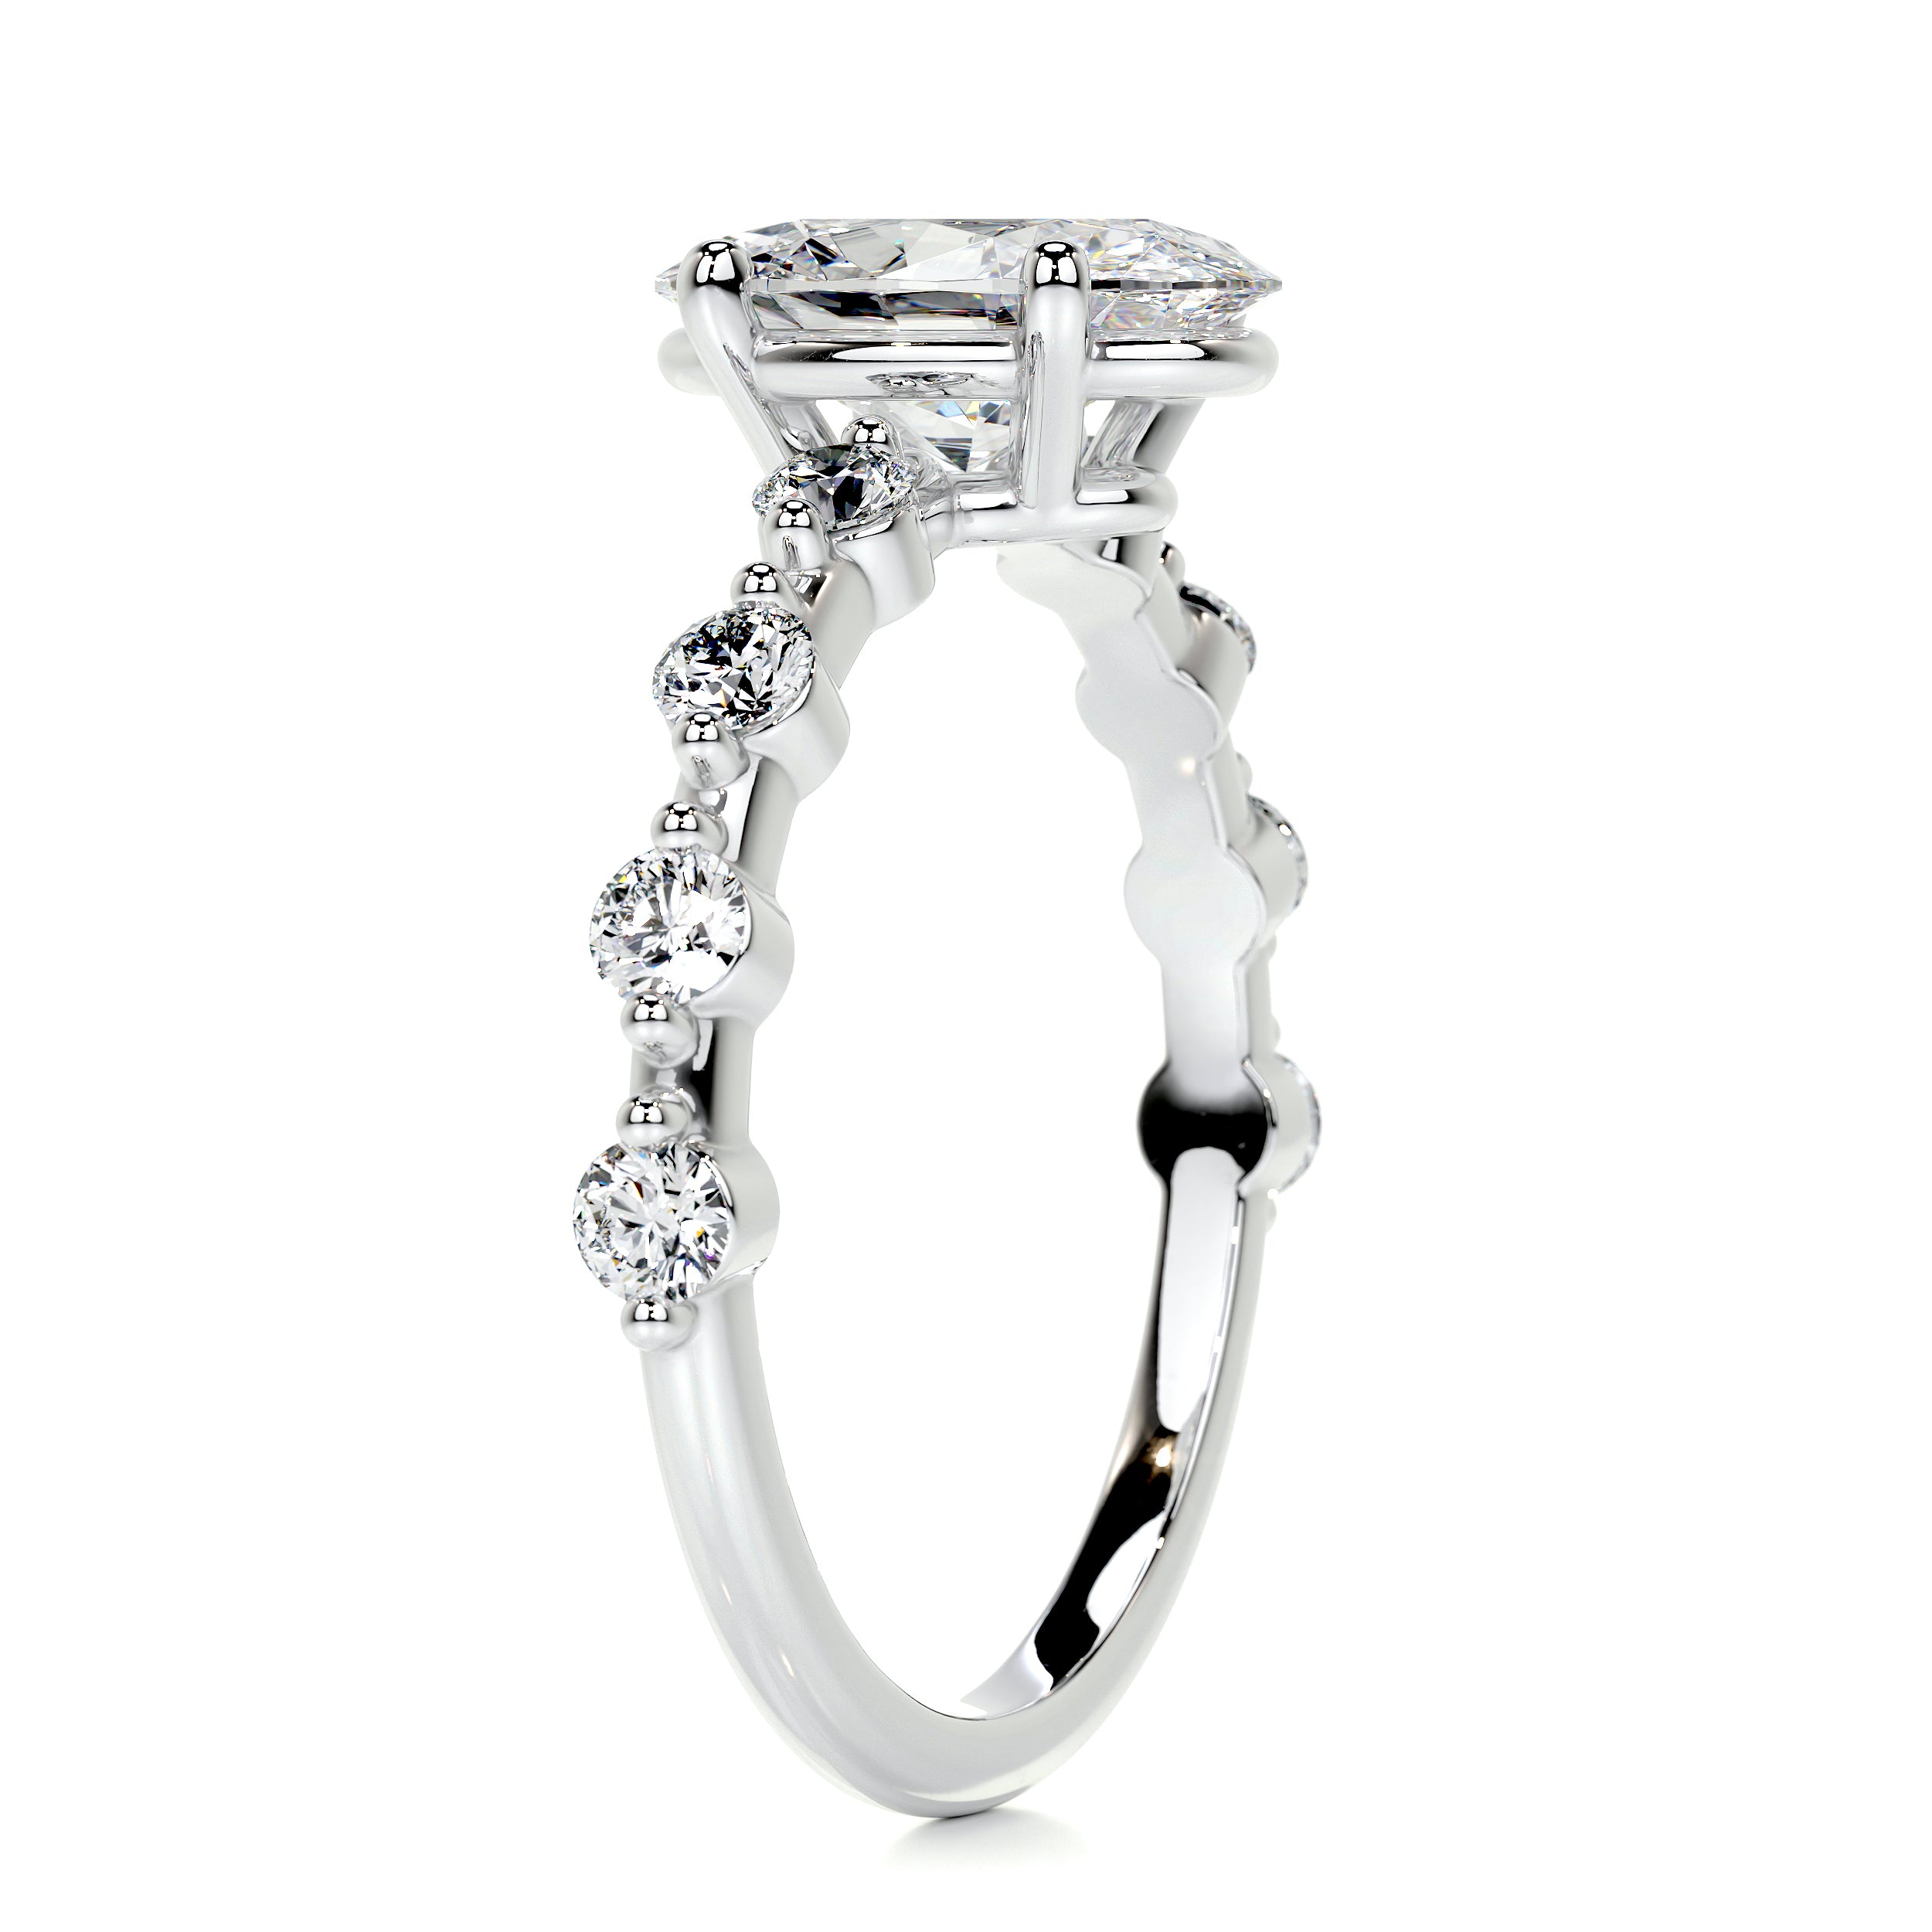 Bell Diamond Engagement Ring   (1.5 Carat) -Platinum